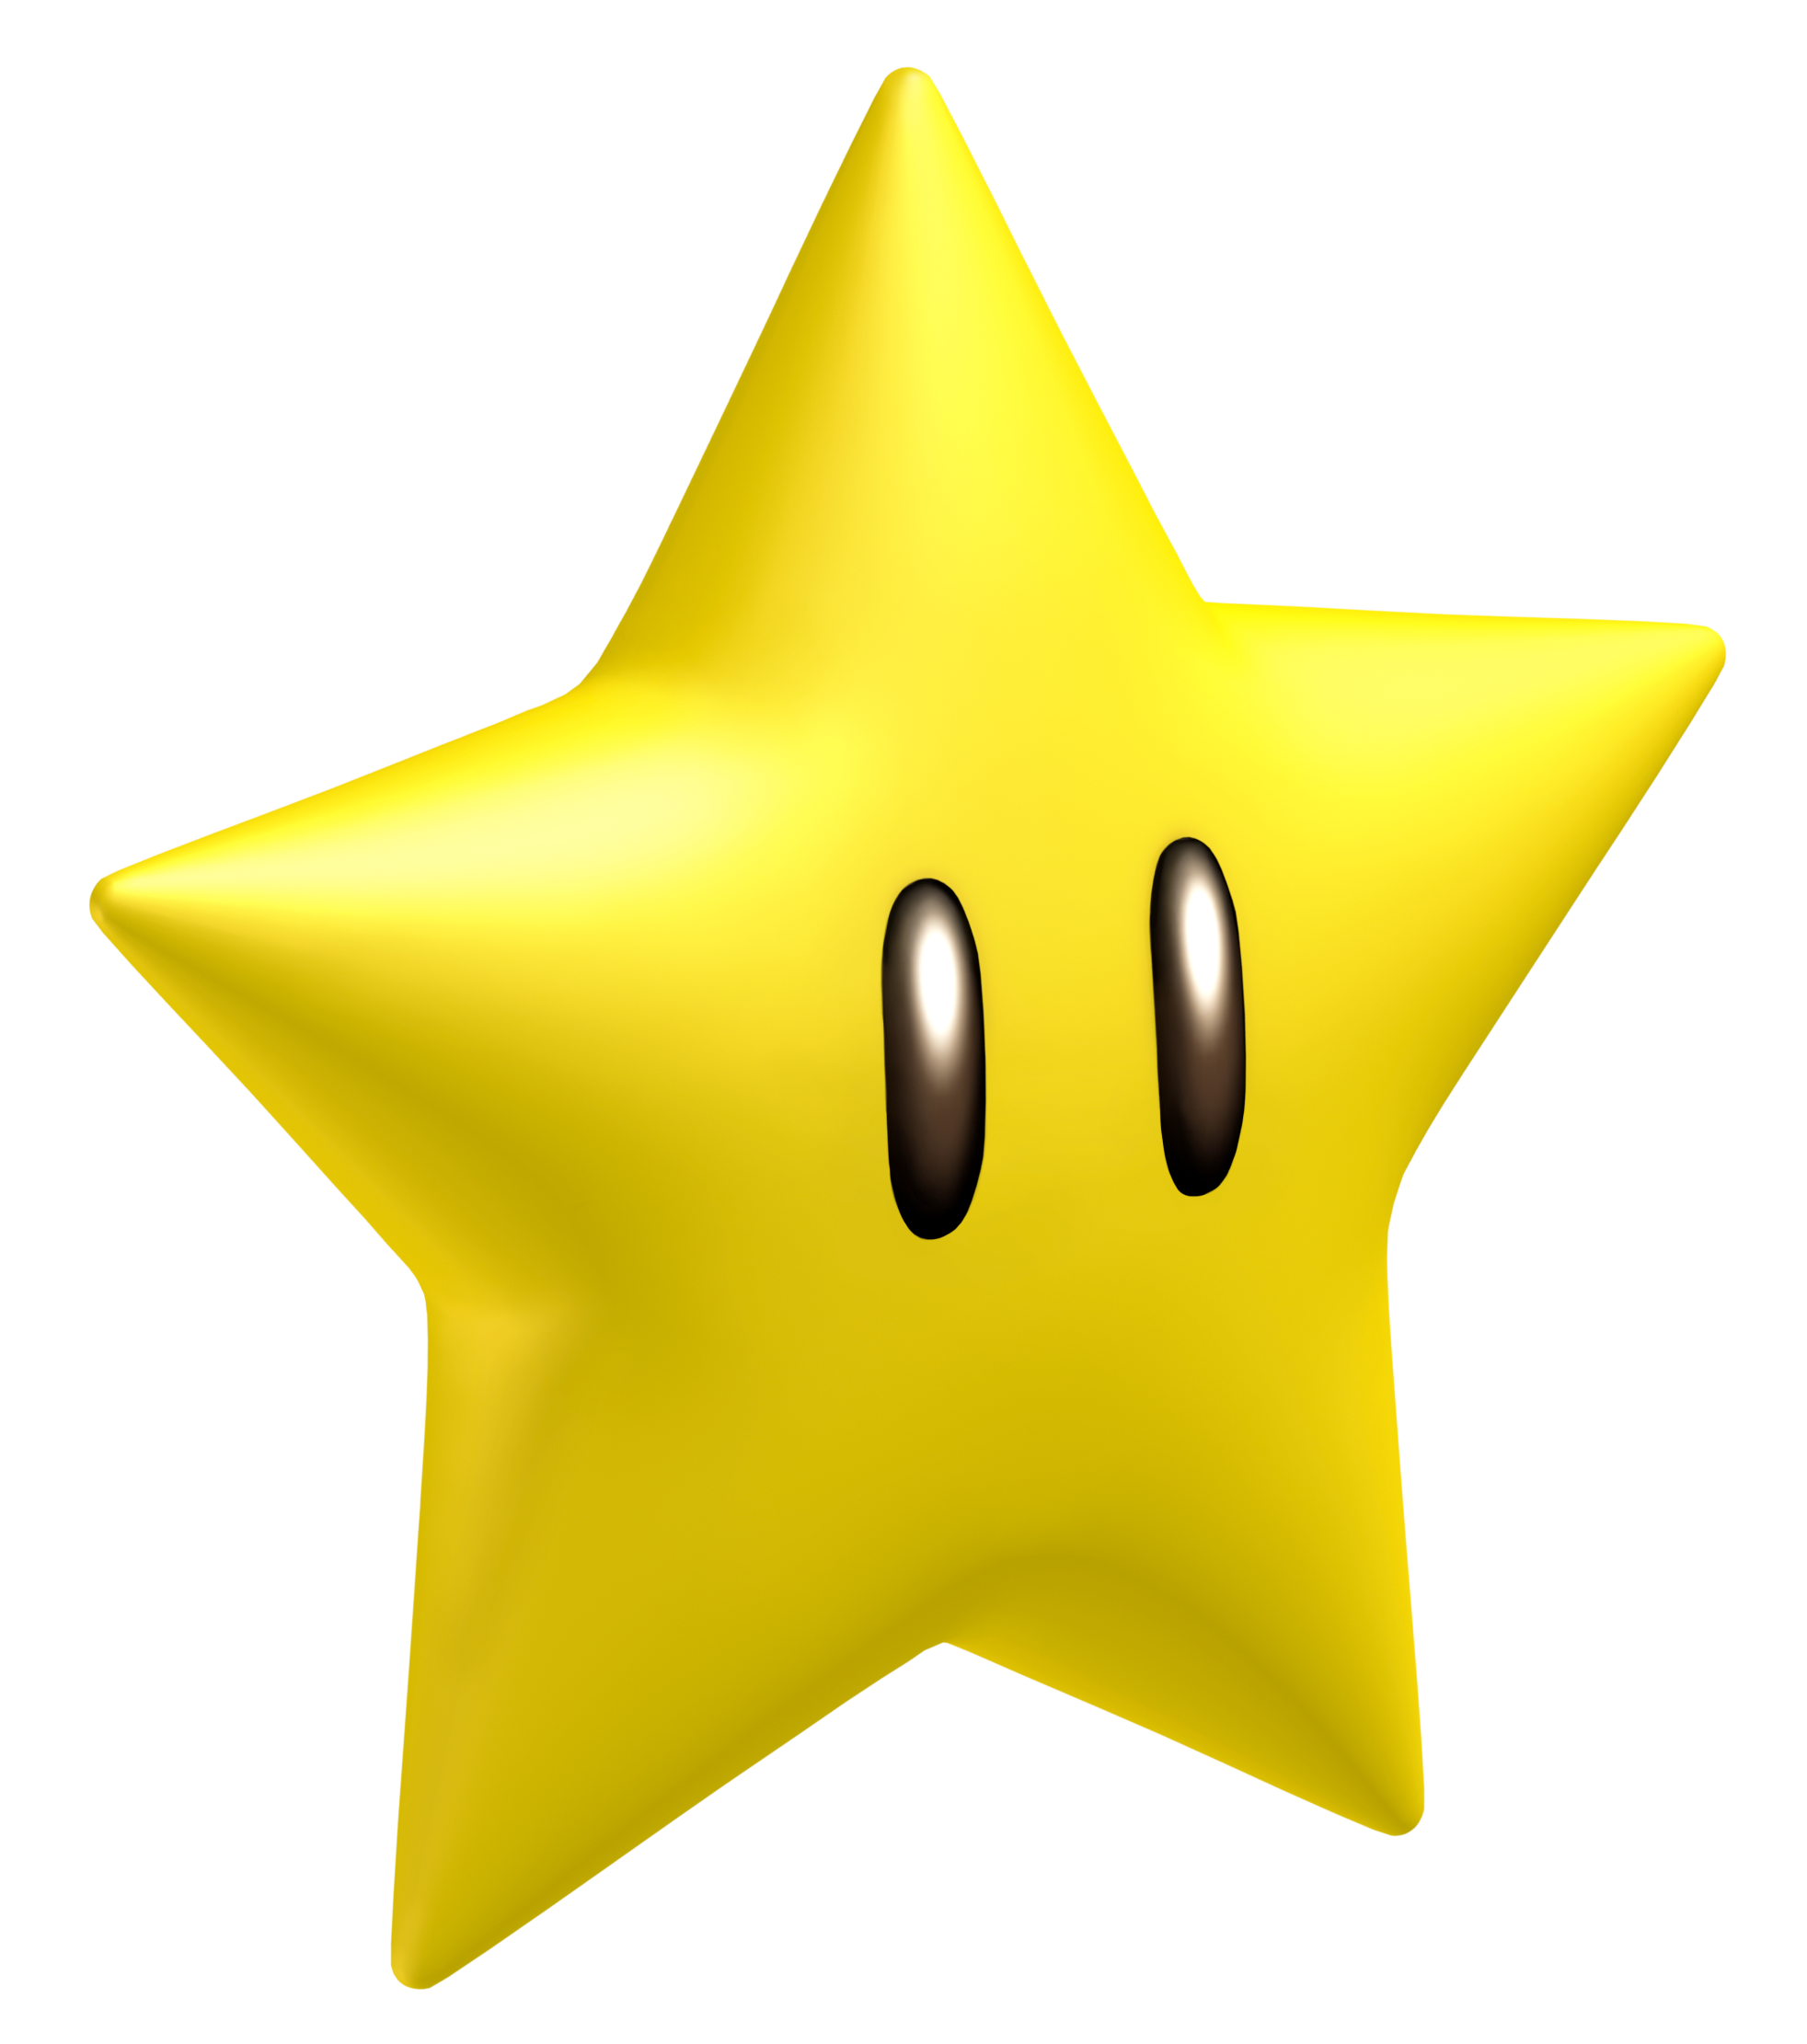 Mario star clipart.